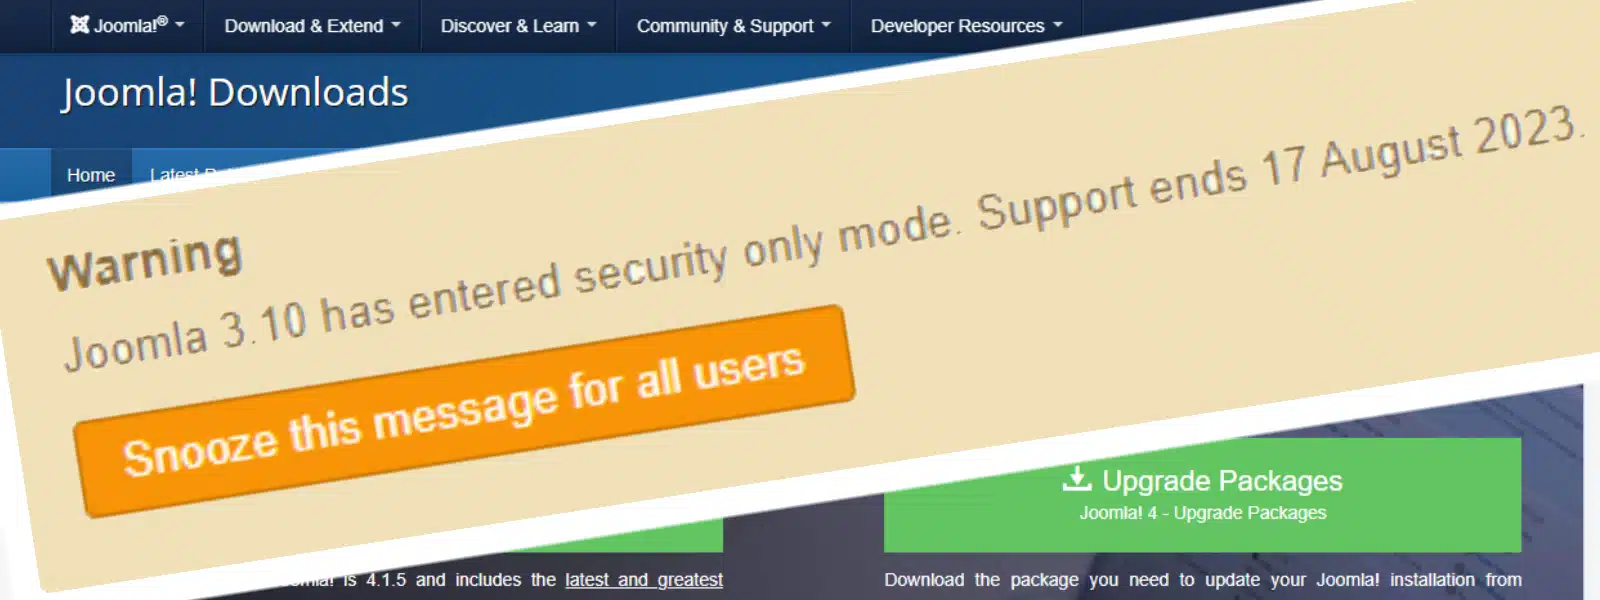 Web Design - Joomla 3 10 Has Entered Security Only Mode - Joomla 2022